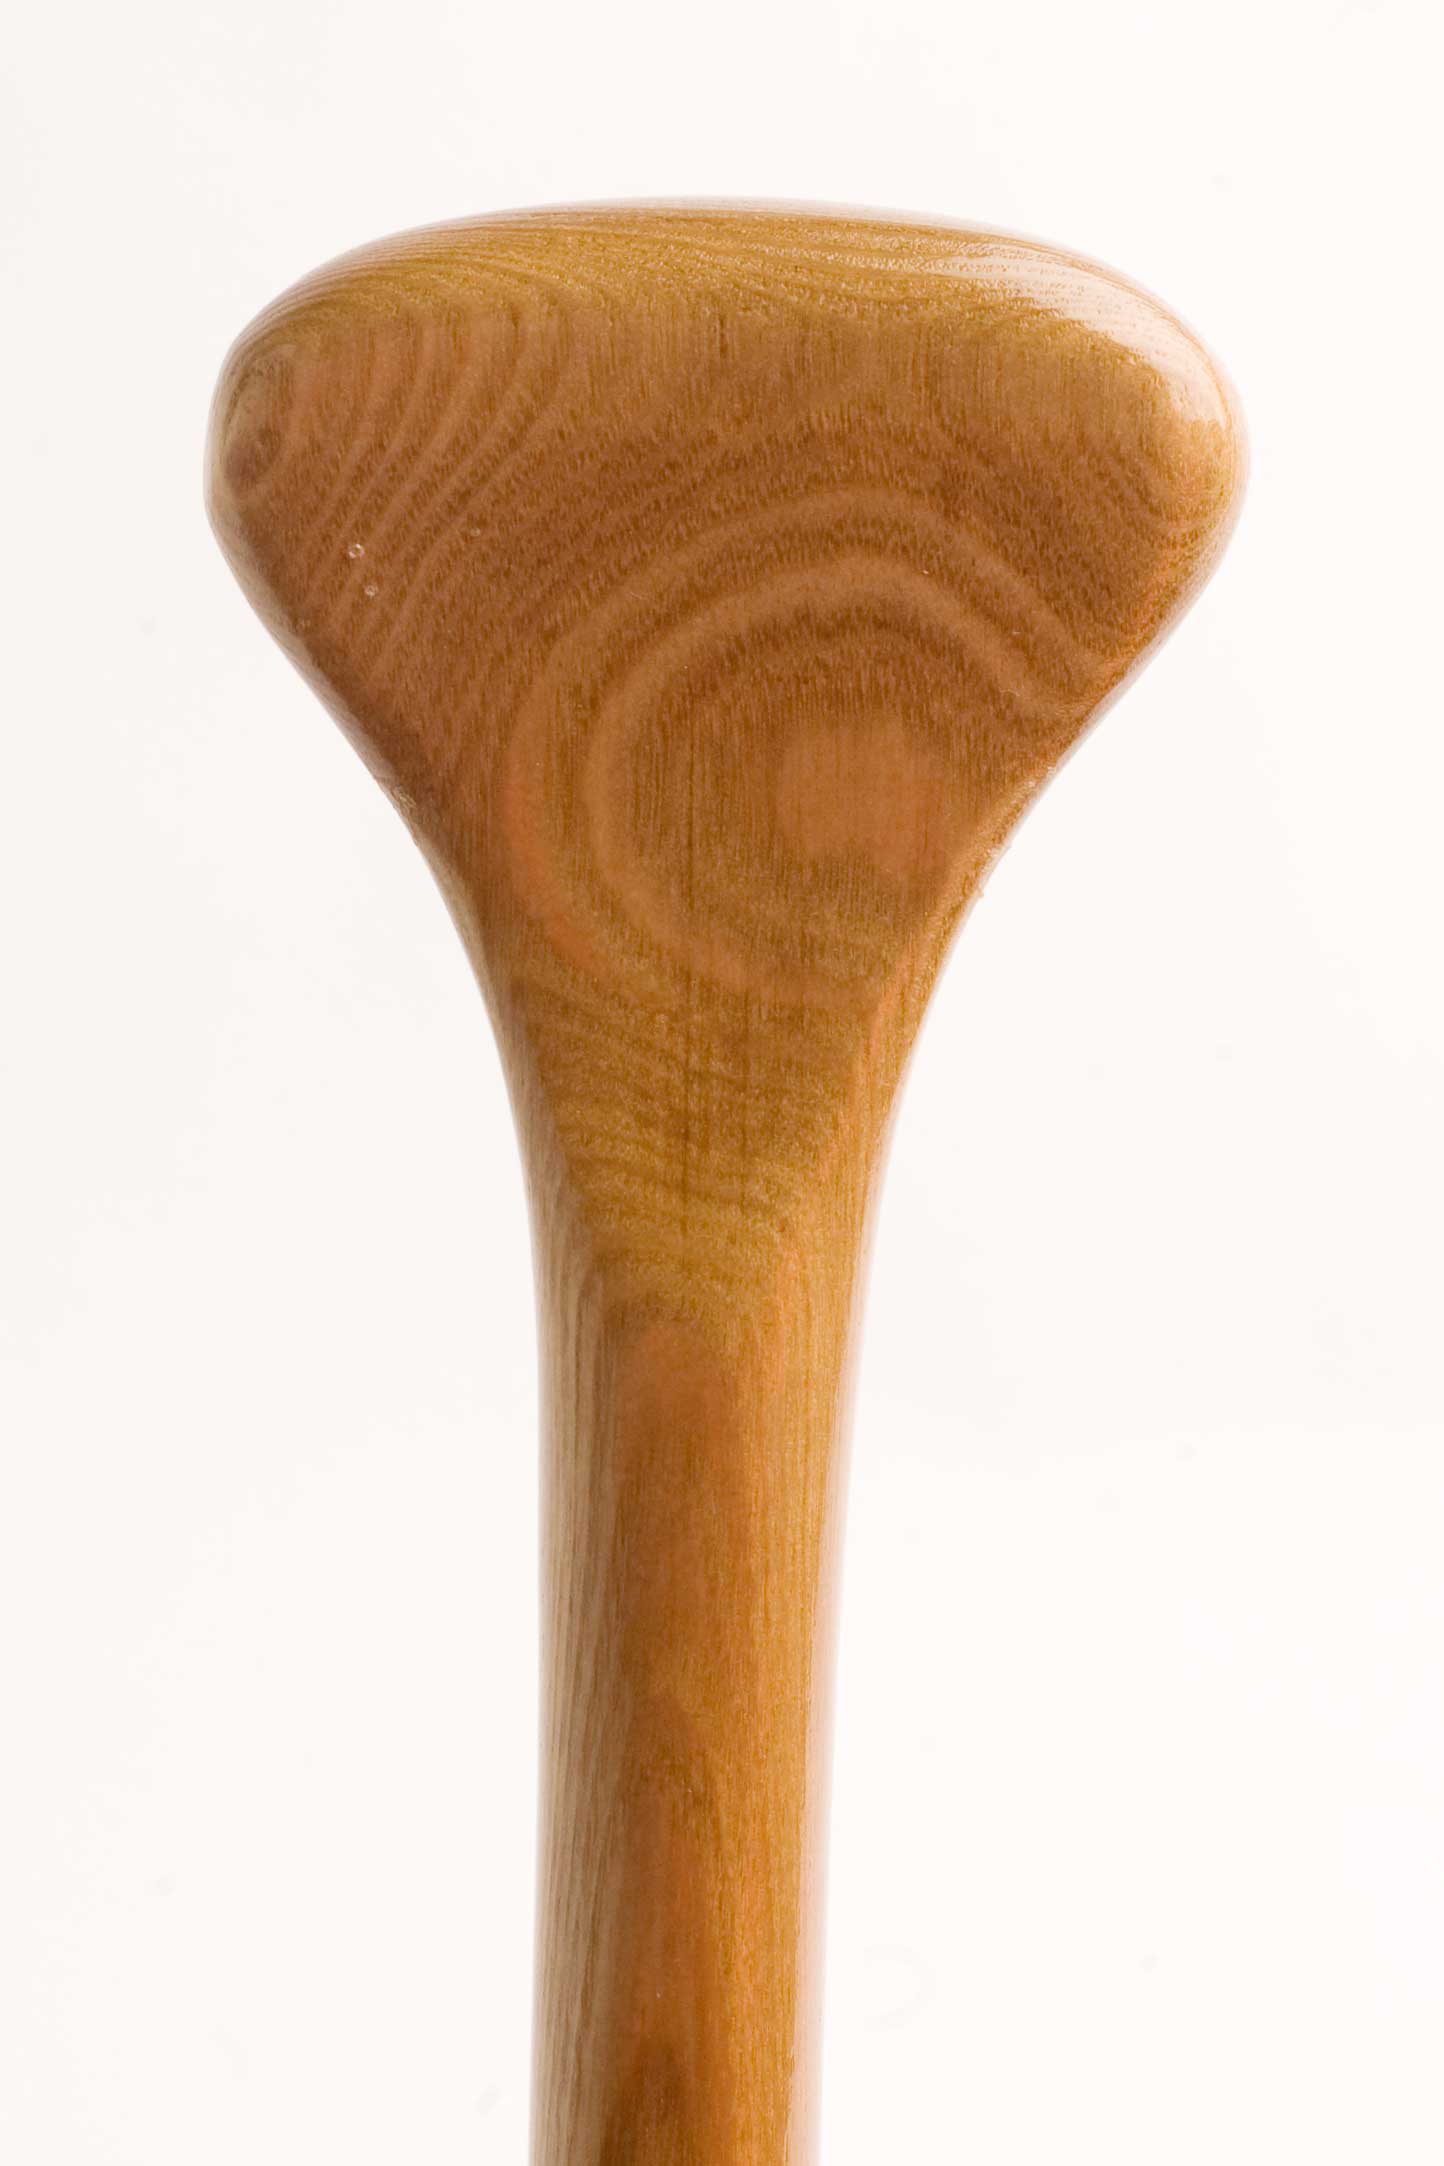 standard wood paddle grip beech wood